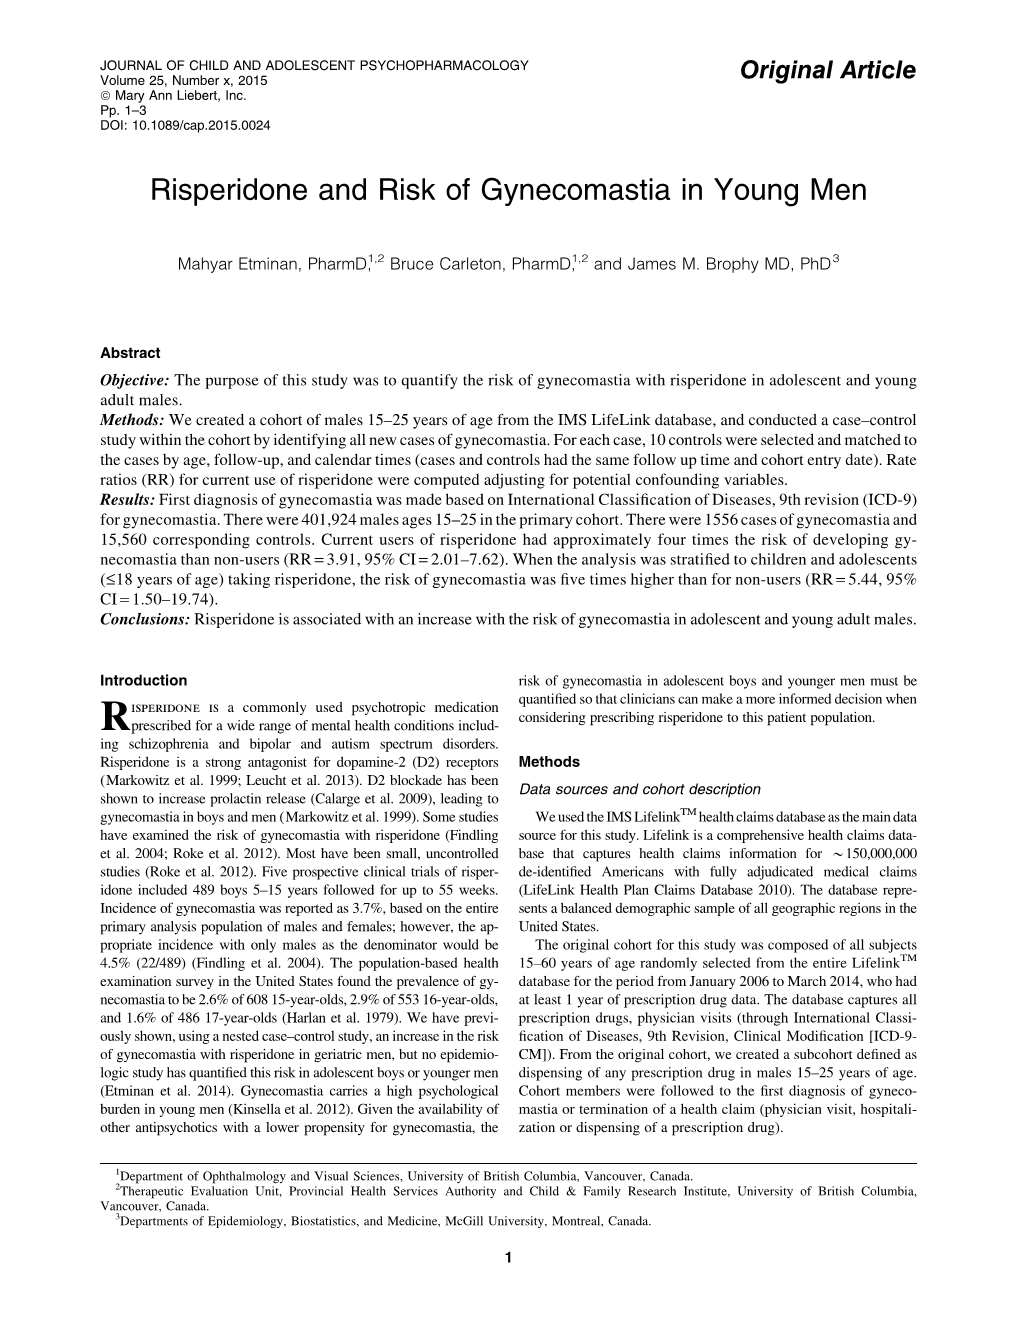 Risperidone and Risk of Gynecomastia in Young Men